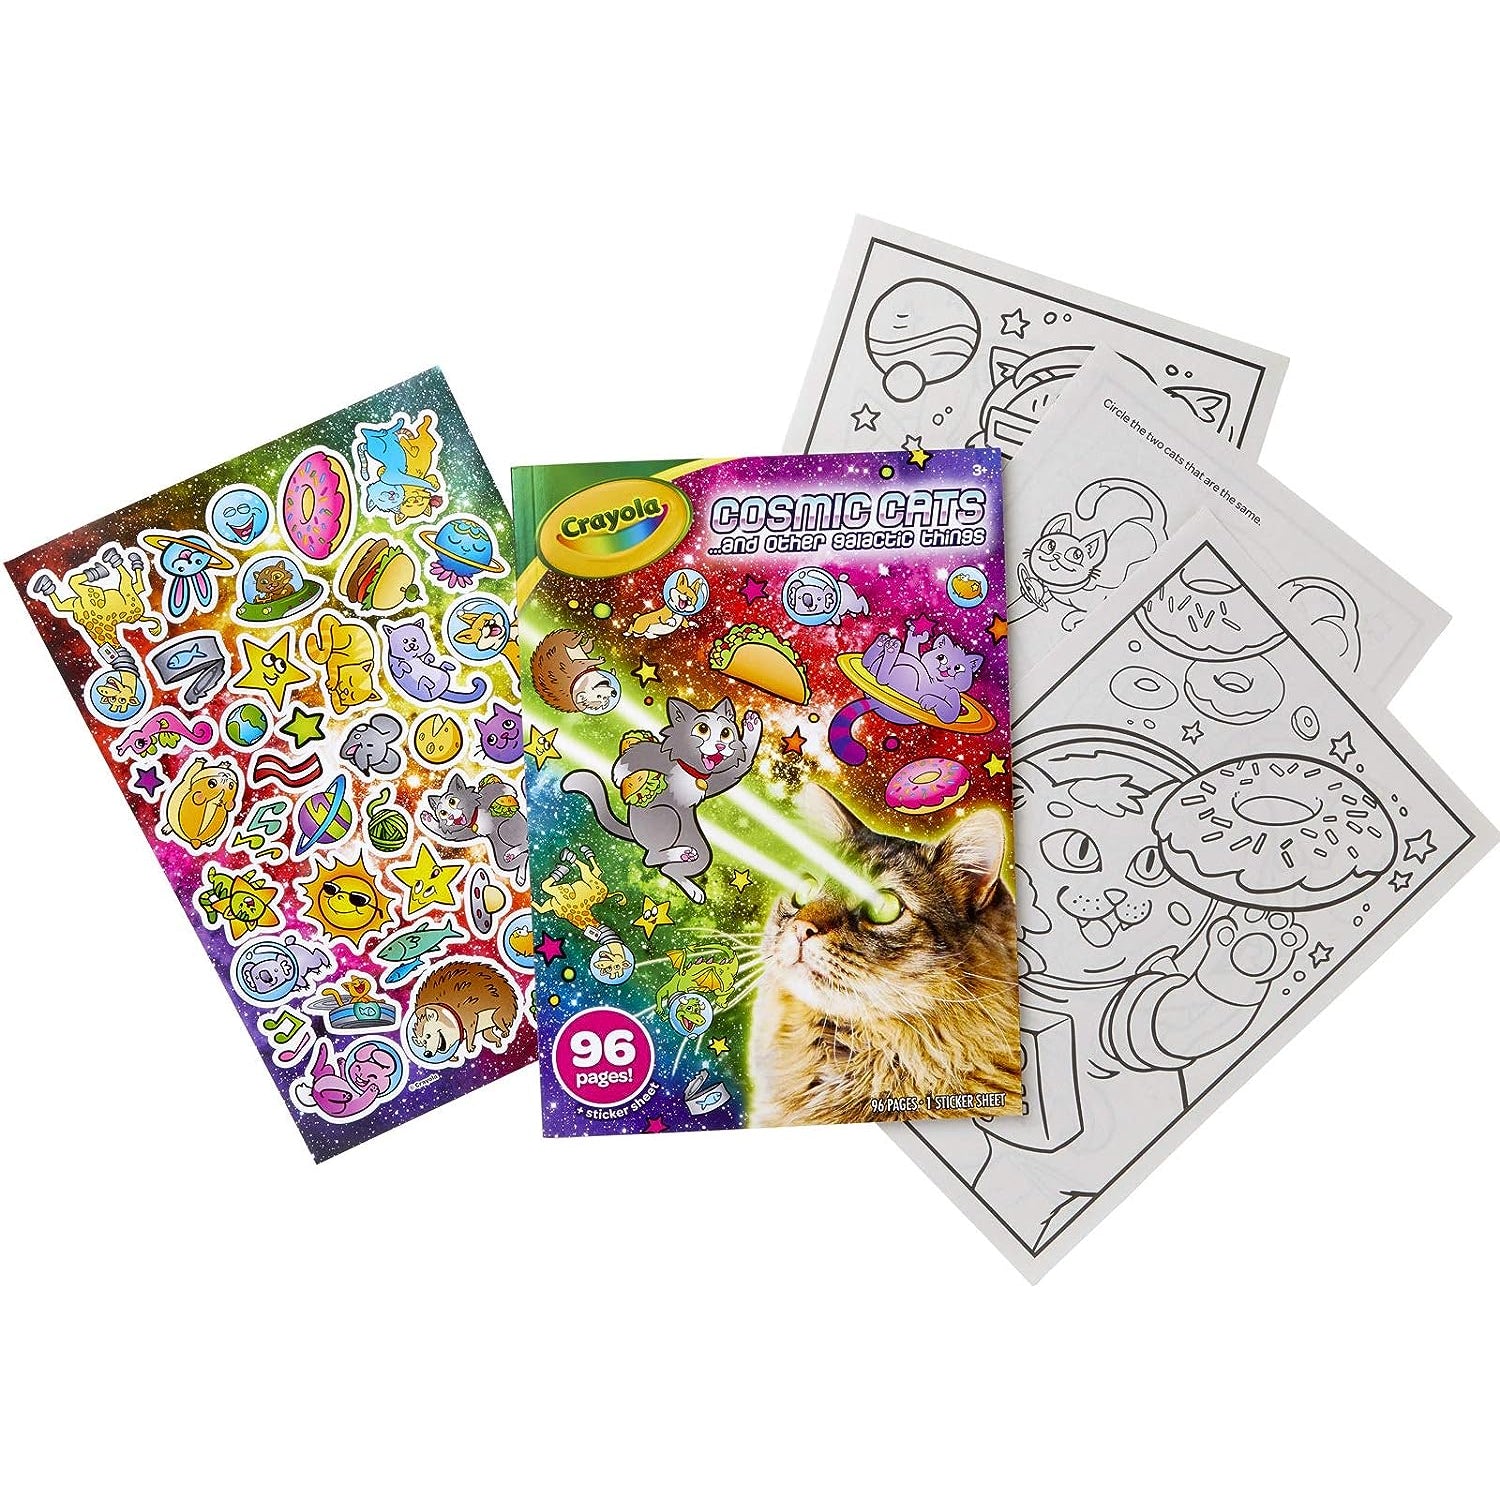 Crayola Cosmic Cats Coloring Book, Sticker Sheet